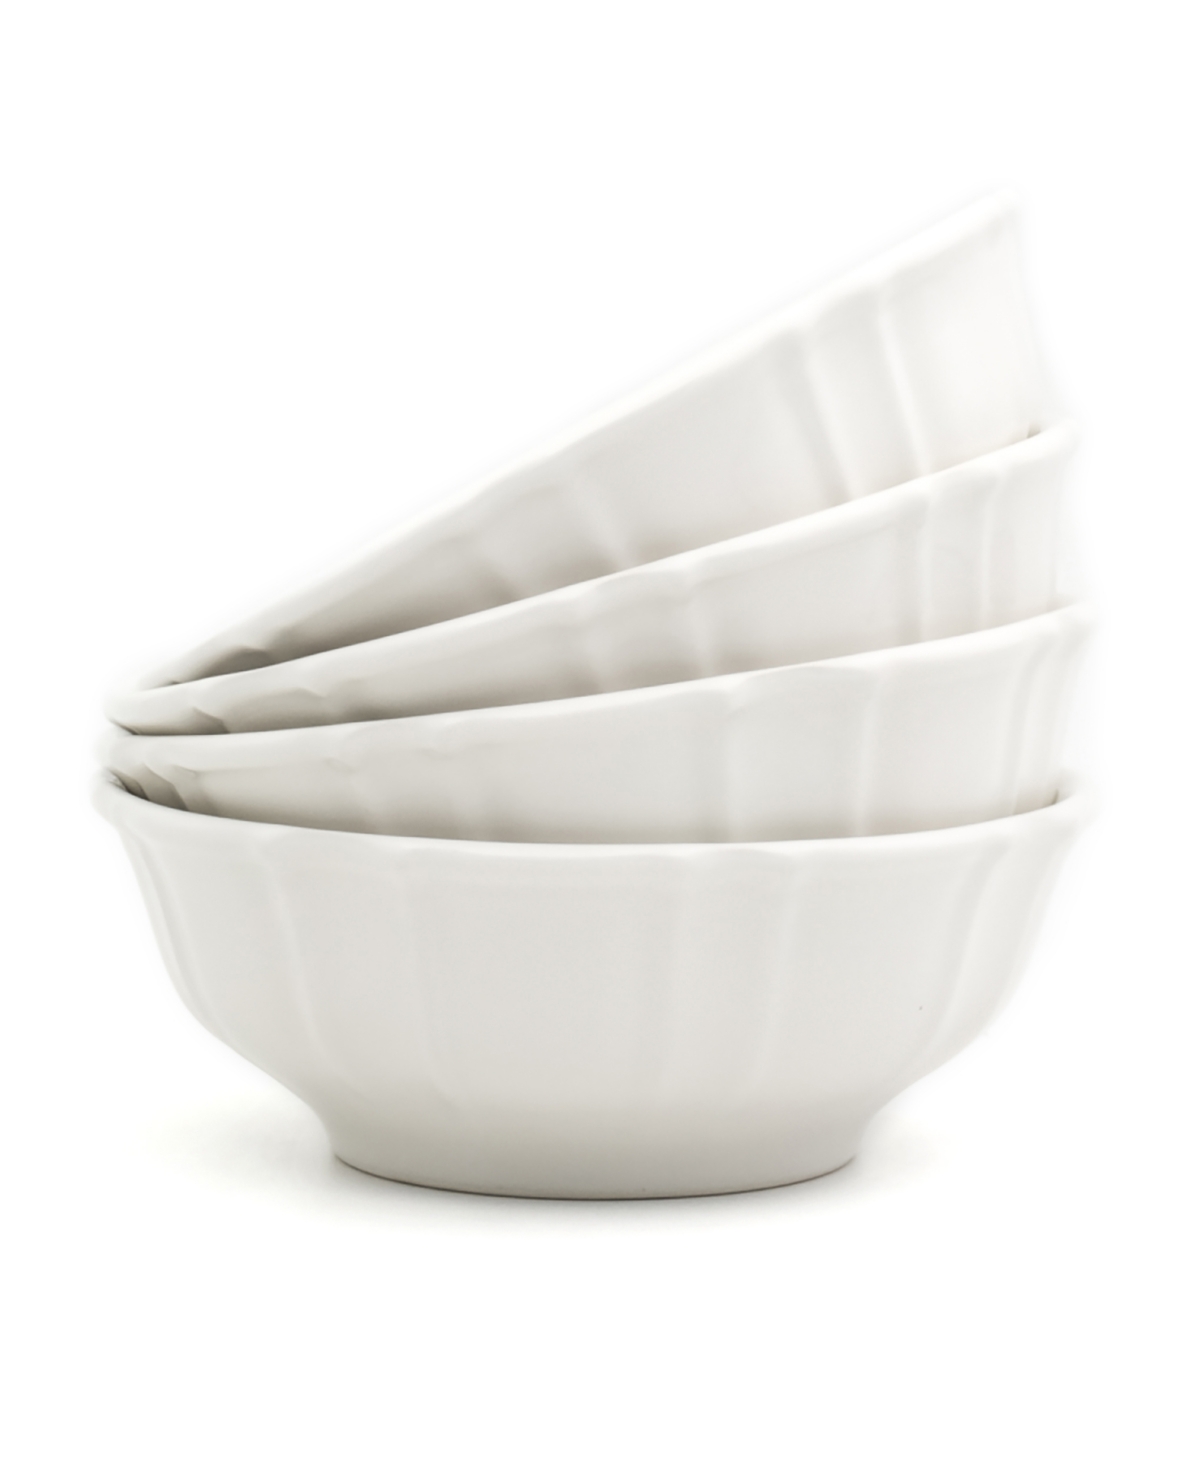 Chloe 4 Piece White Cereal Bowl Set - Soft White